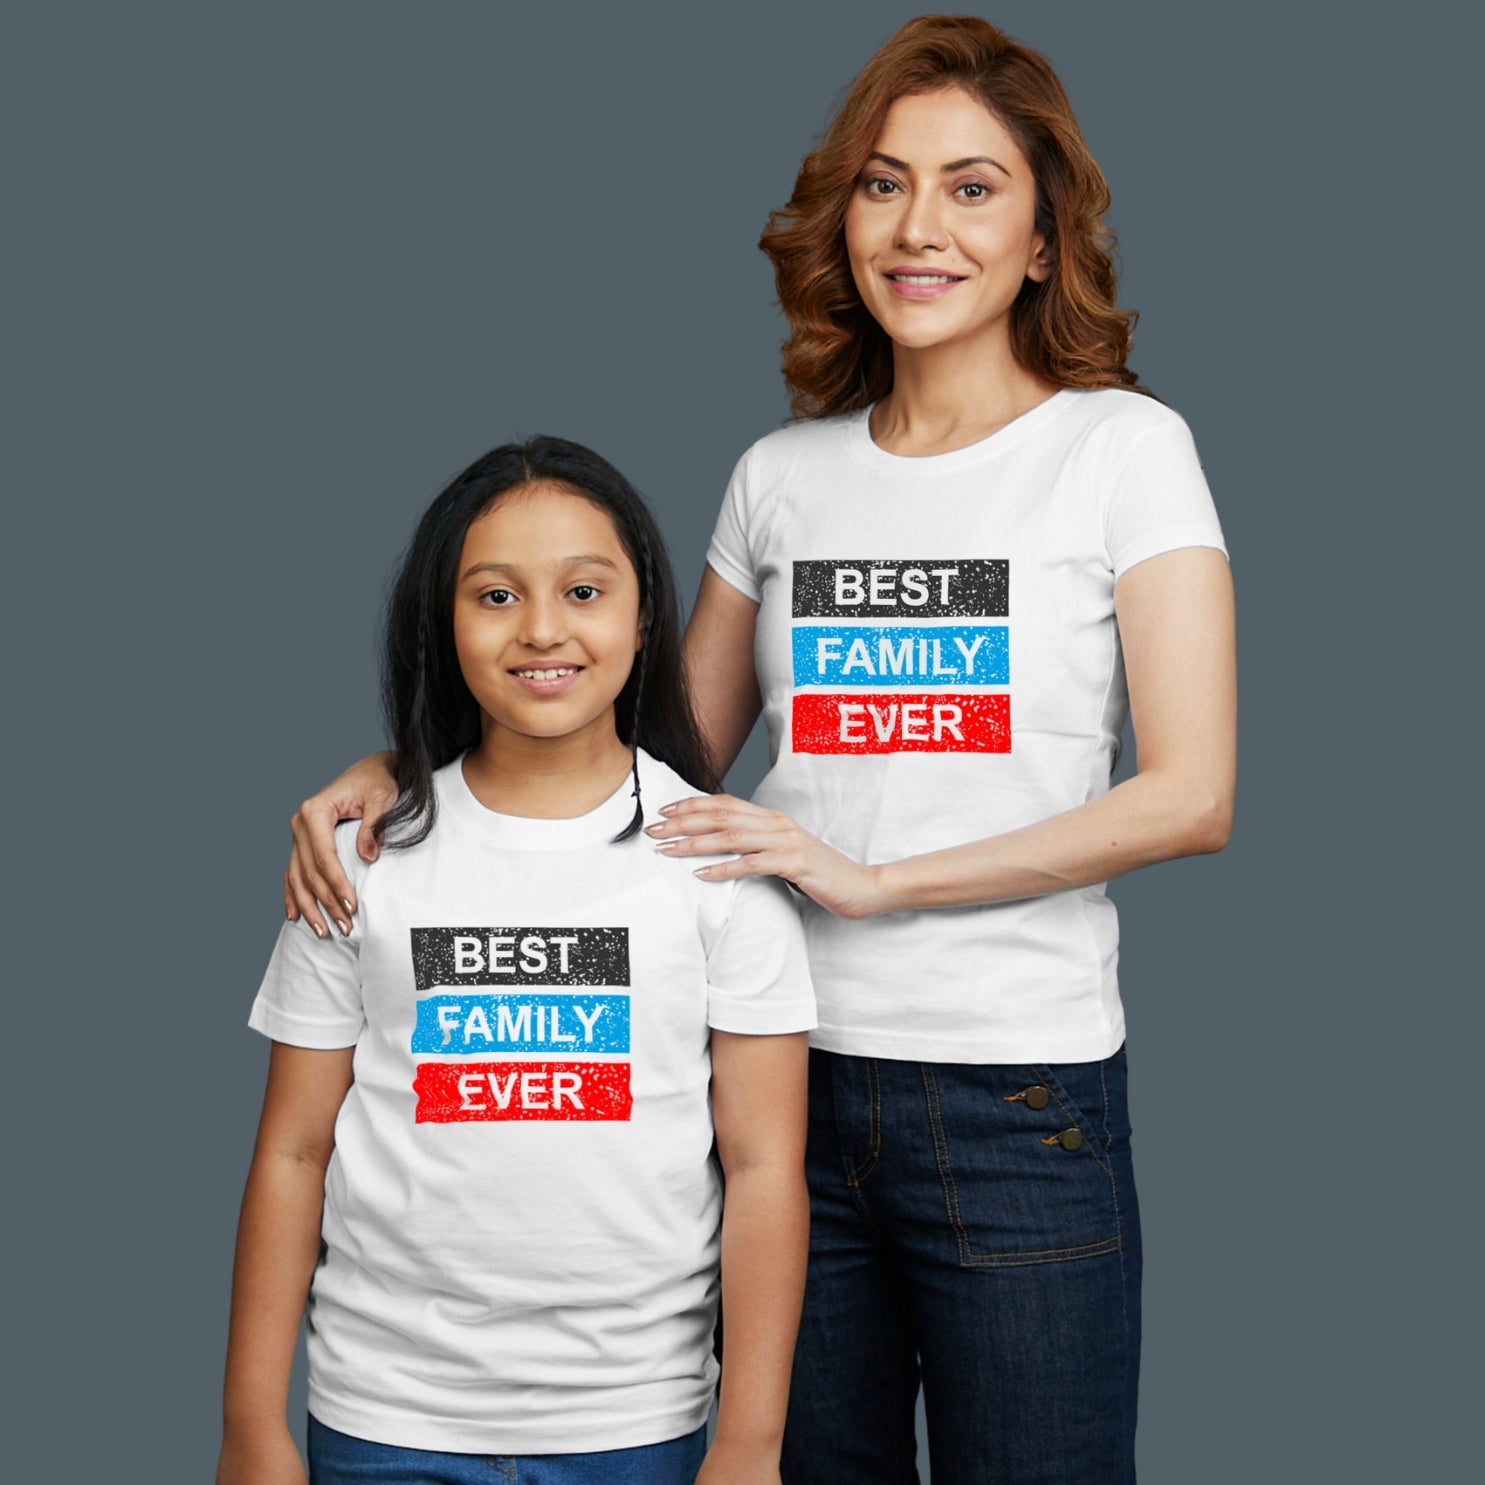 Family of 2 t shirt for Mom Daughter in White Colour- Best Family Ever Variant